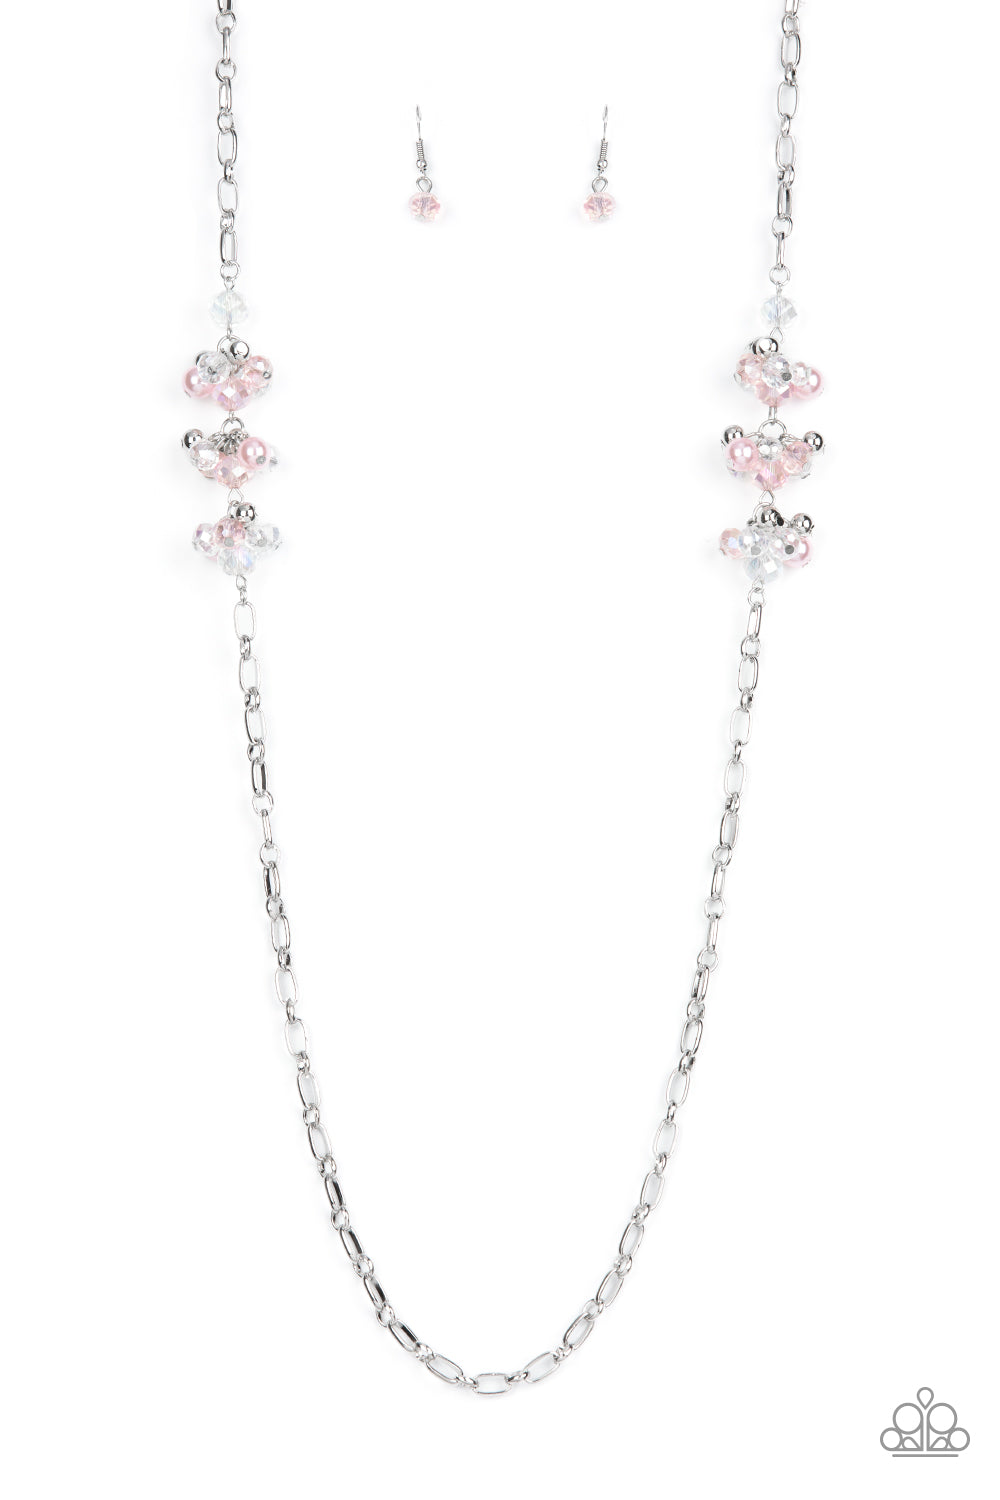 poshly-parisian-pink-necklace